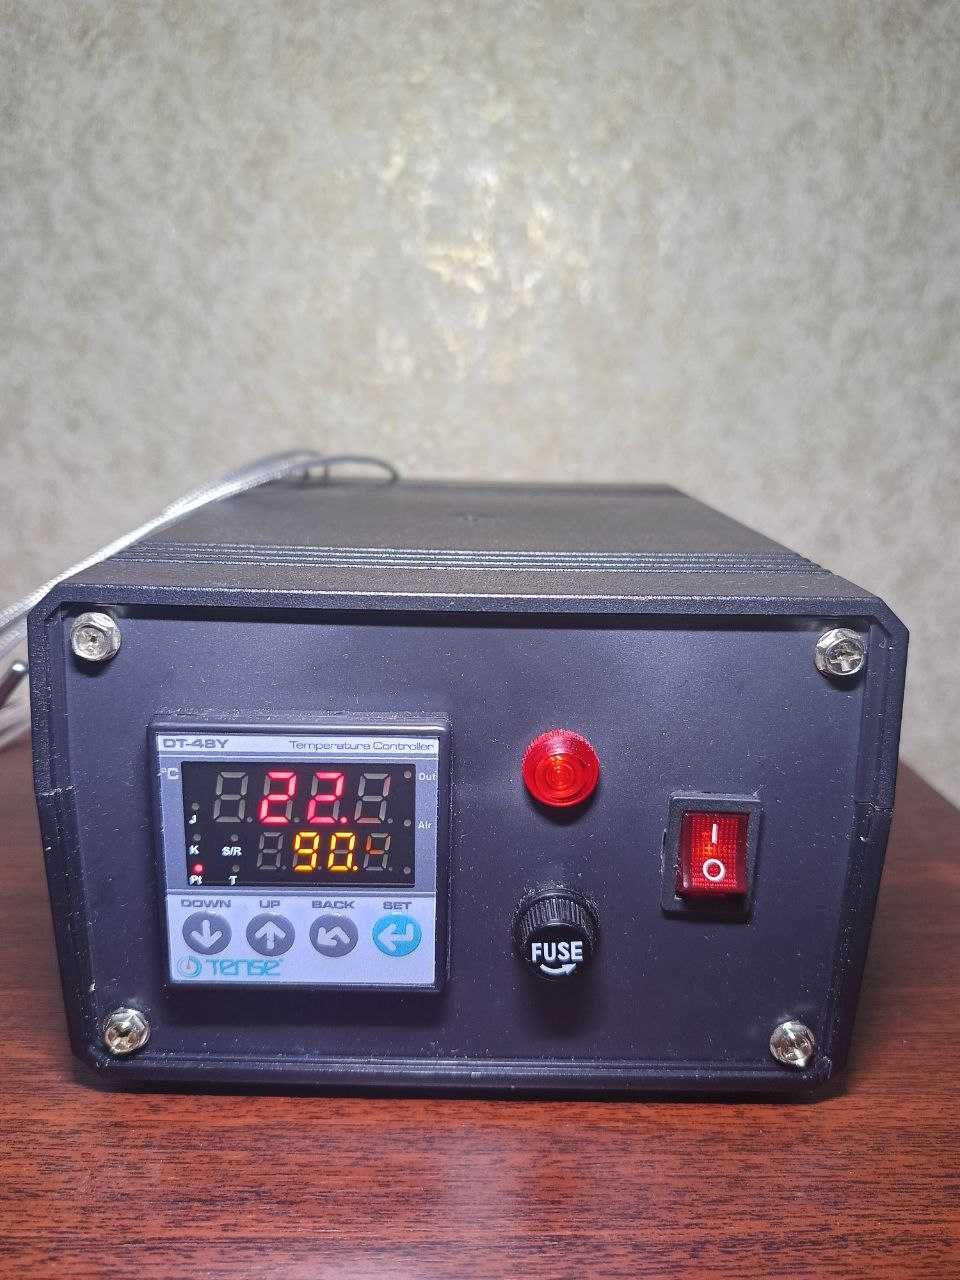 PID контролер (термостат) Tense DT-48Y з датчиком температури PT-100